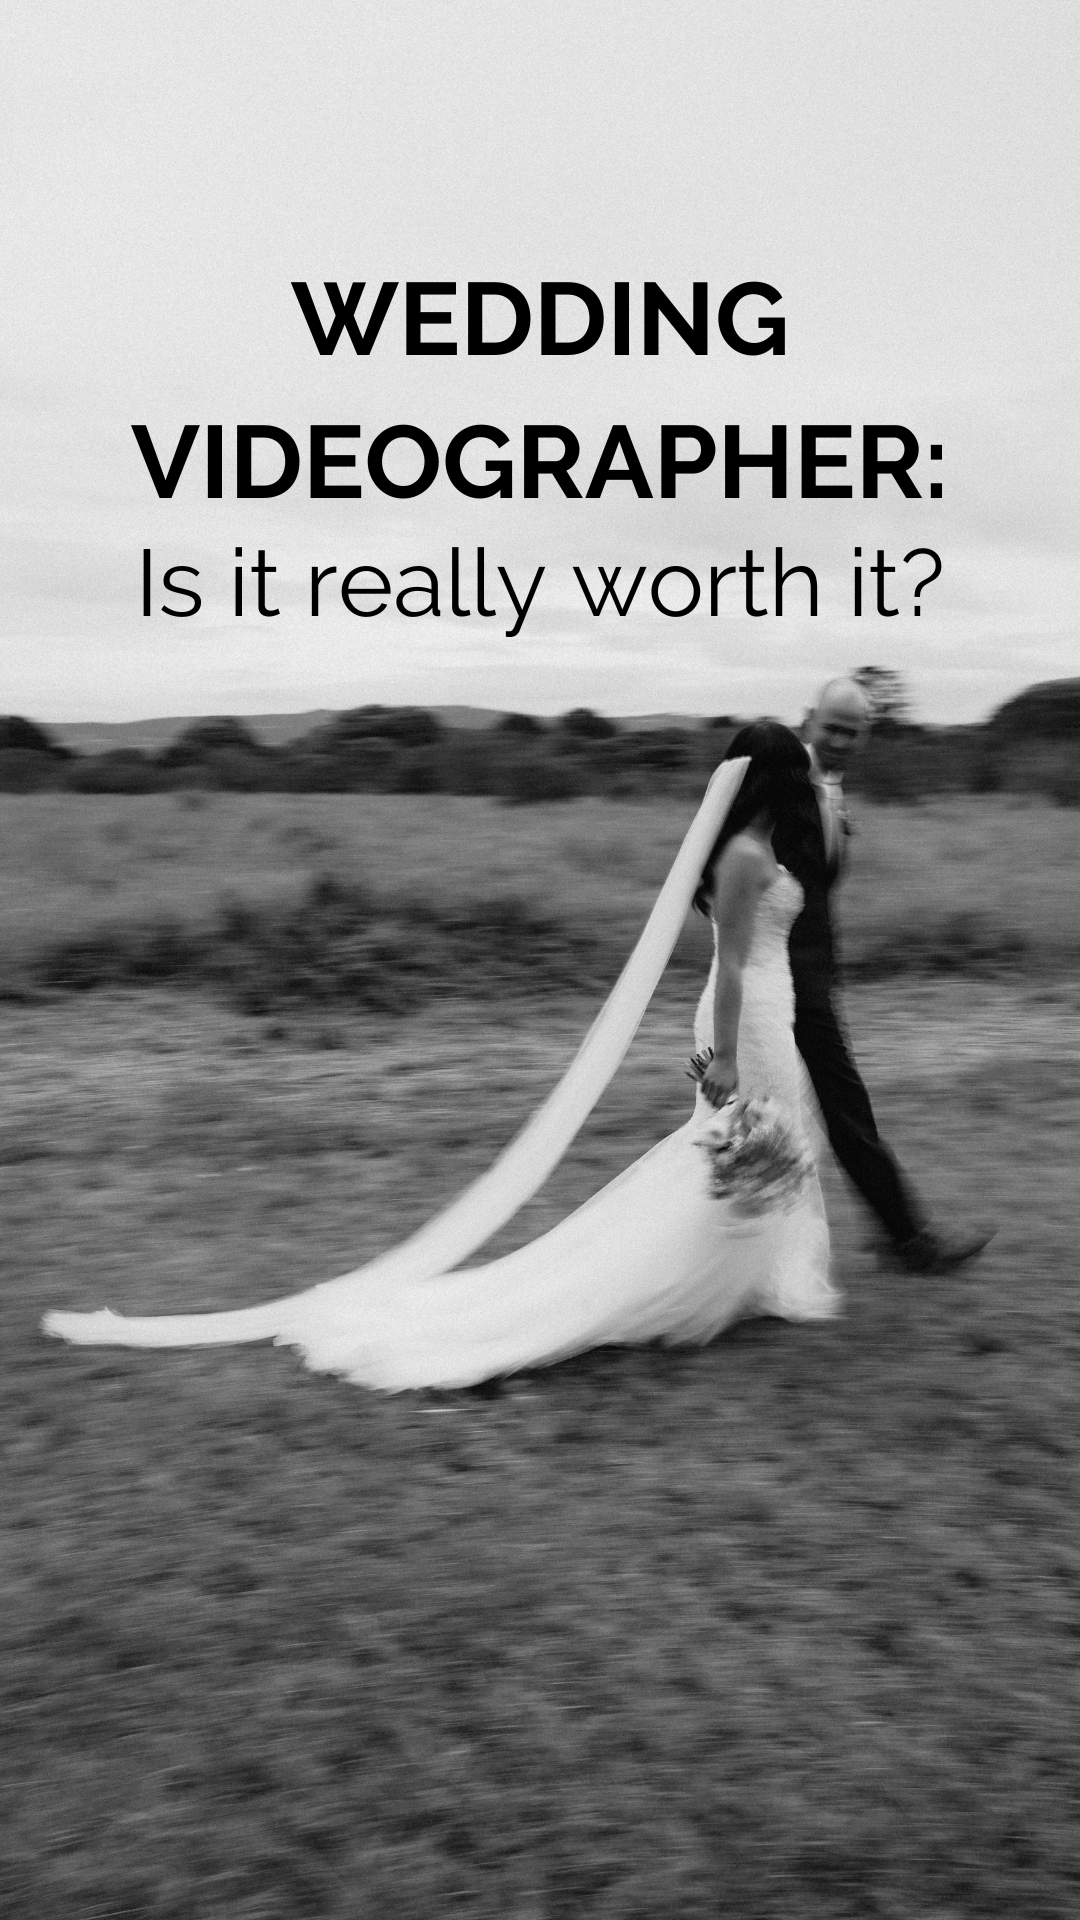 book wedding videographer australia.png